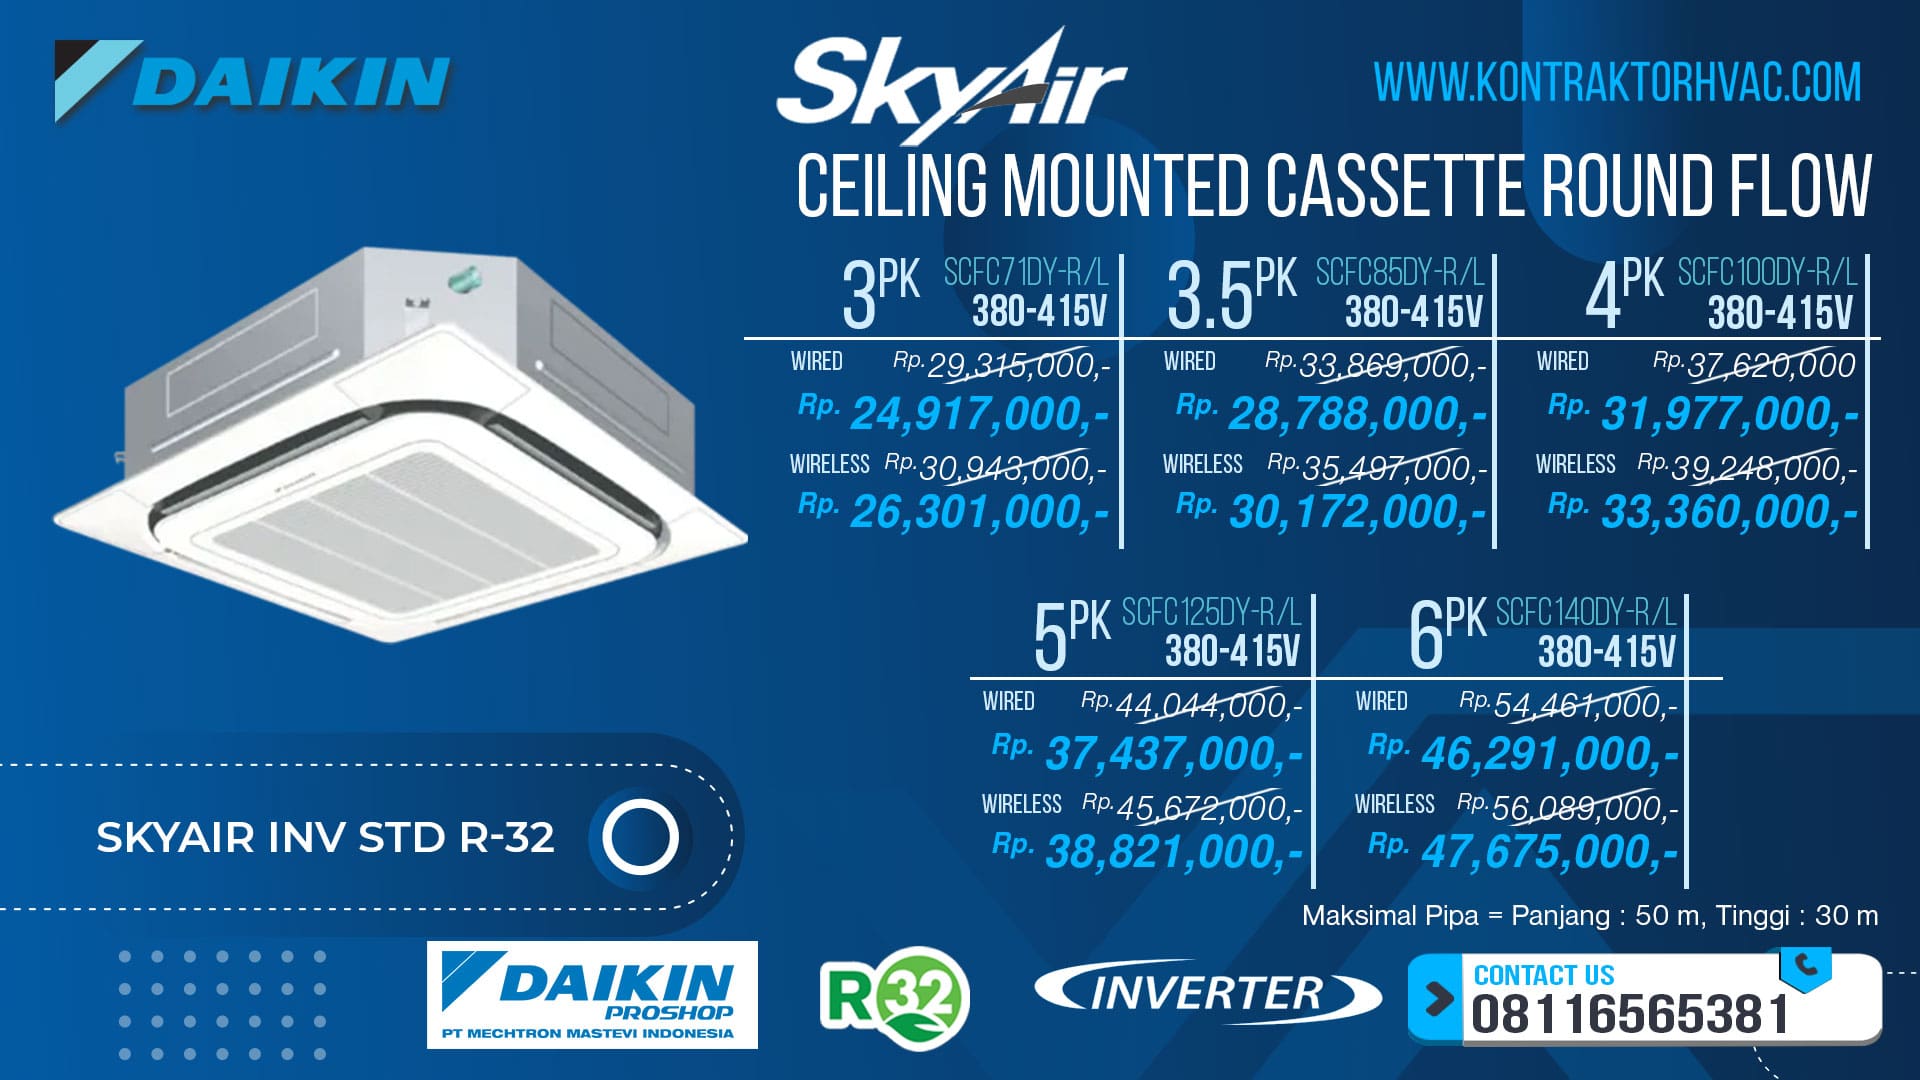 15.Mini-Skyair-Inv-STD-R-32-,-Ceiling-Mounted-Cassette-Round-Flow--Y-min (1)